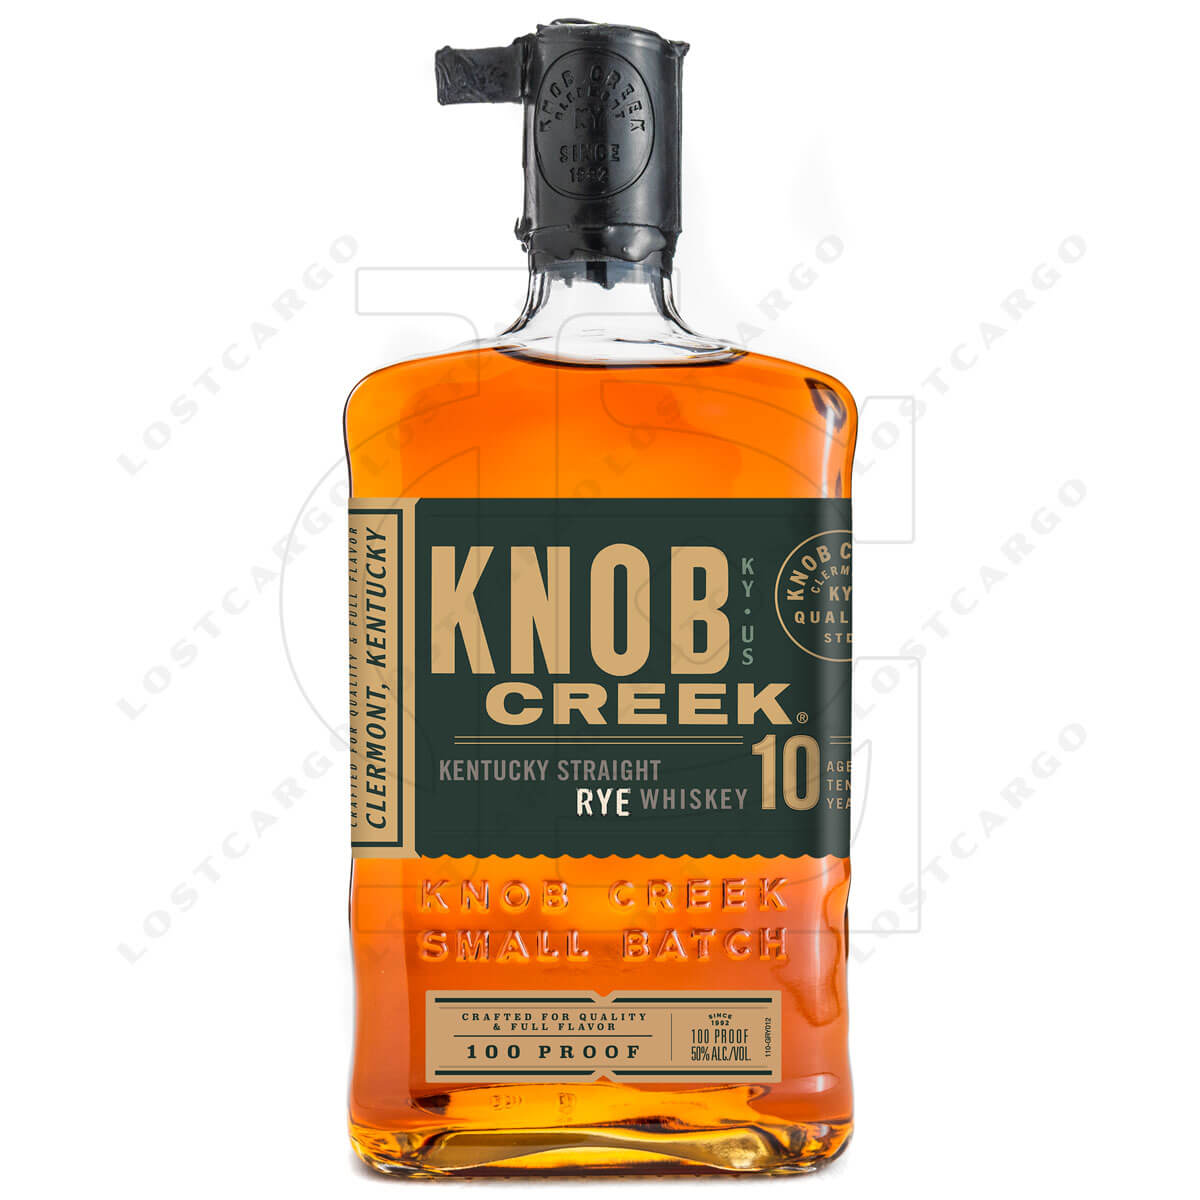 Knob Creek Rye 10 Year Old bottle